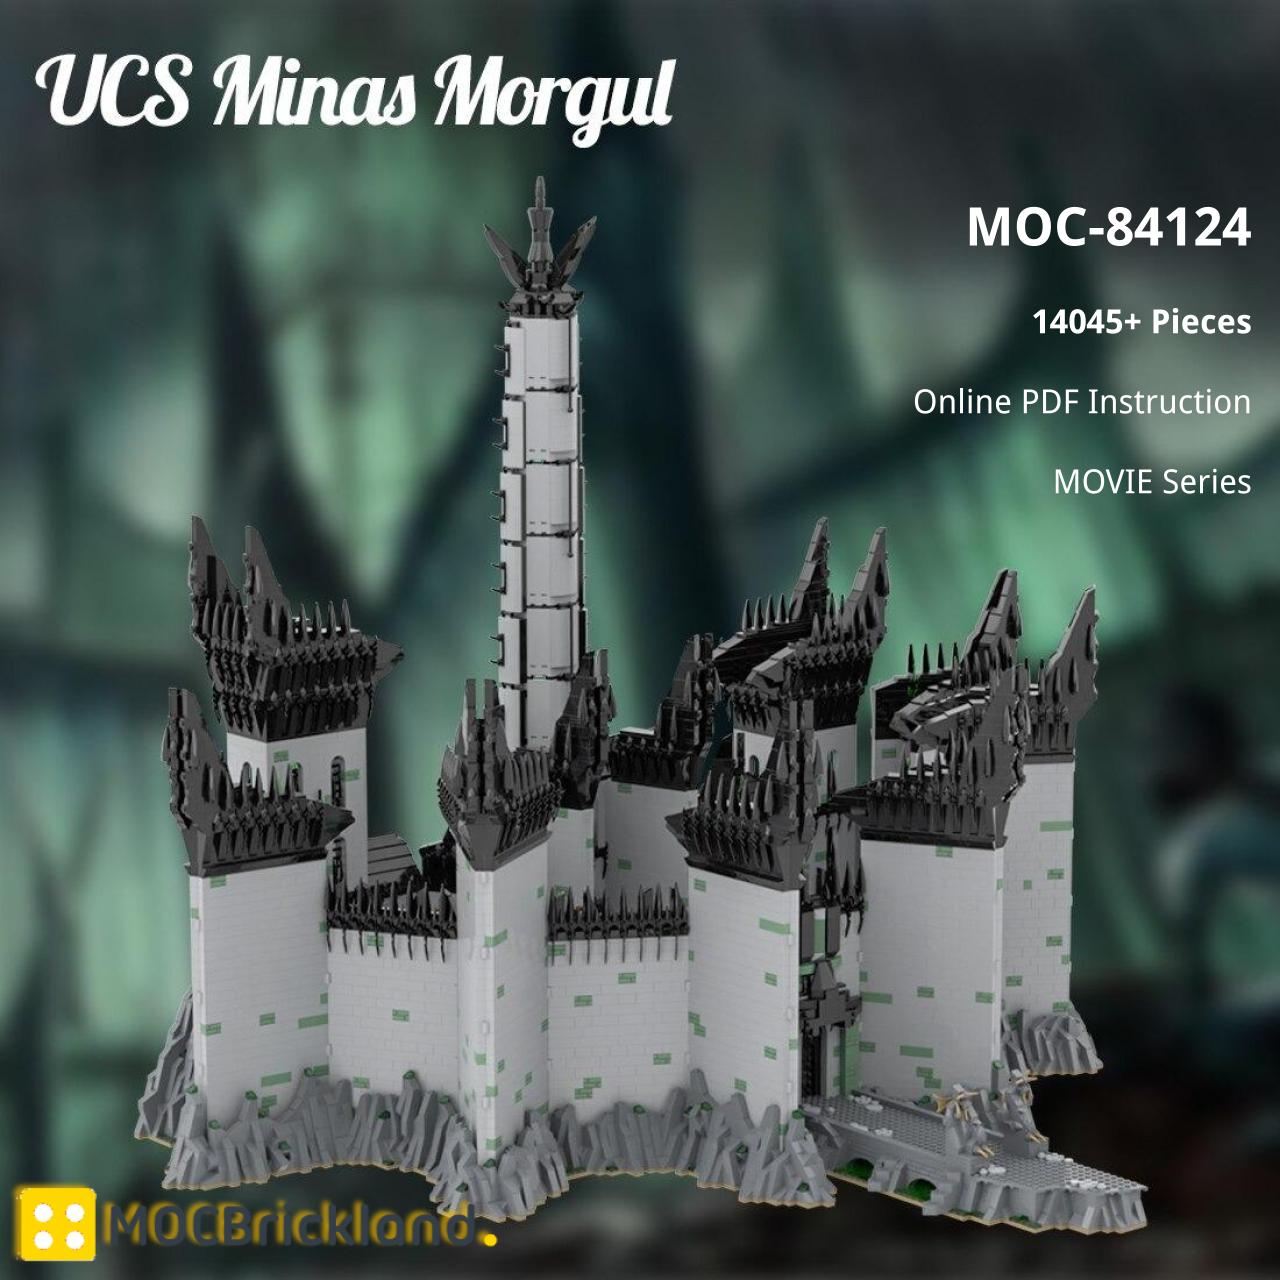 USC Minas Morgul MOVIE MOC-84124 with 14045 pieces